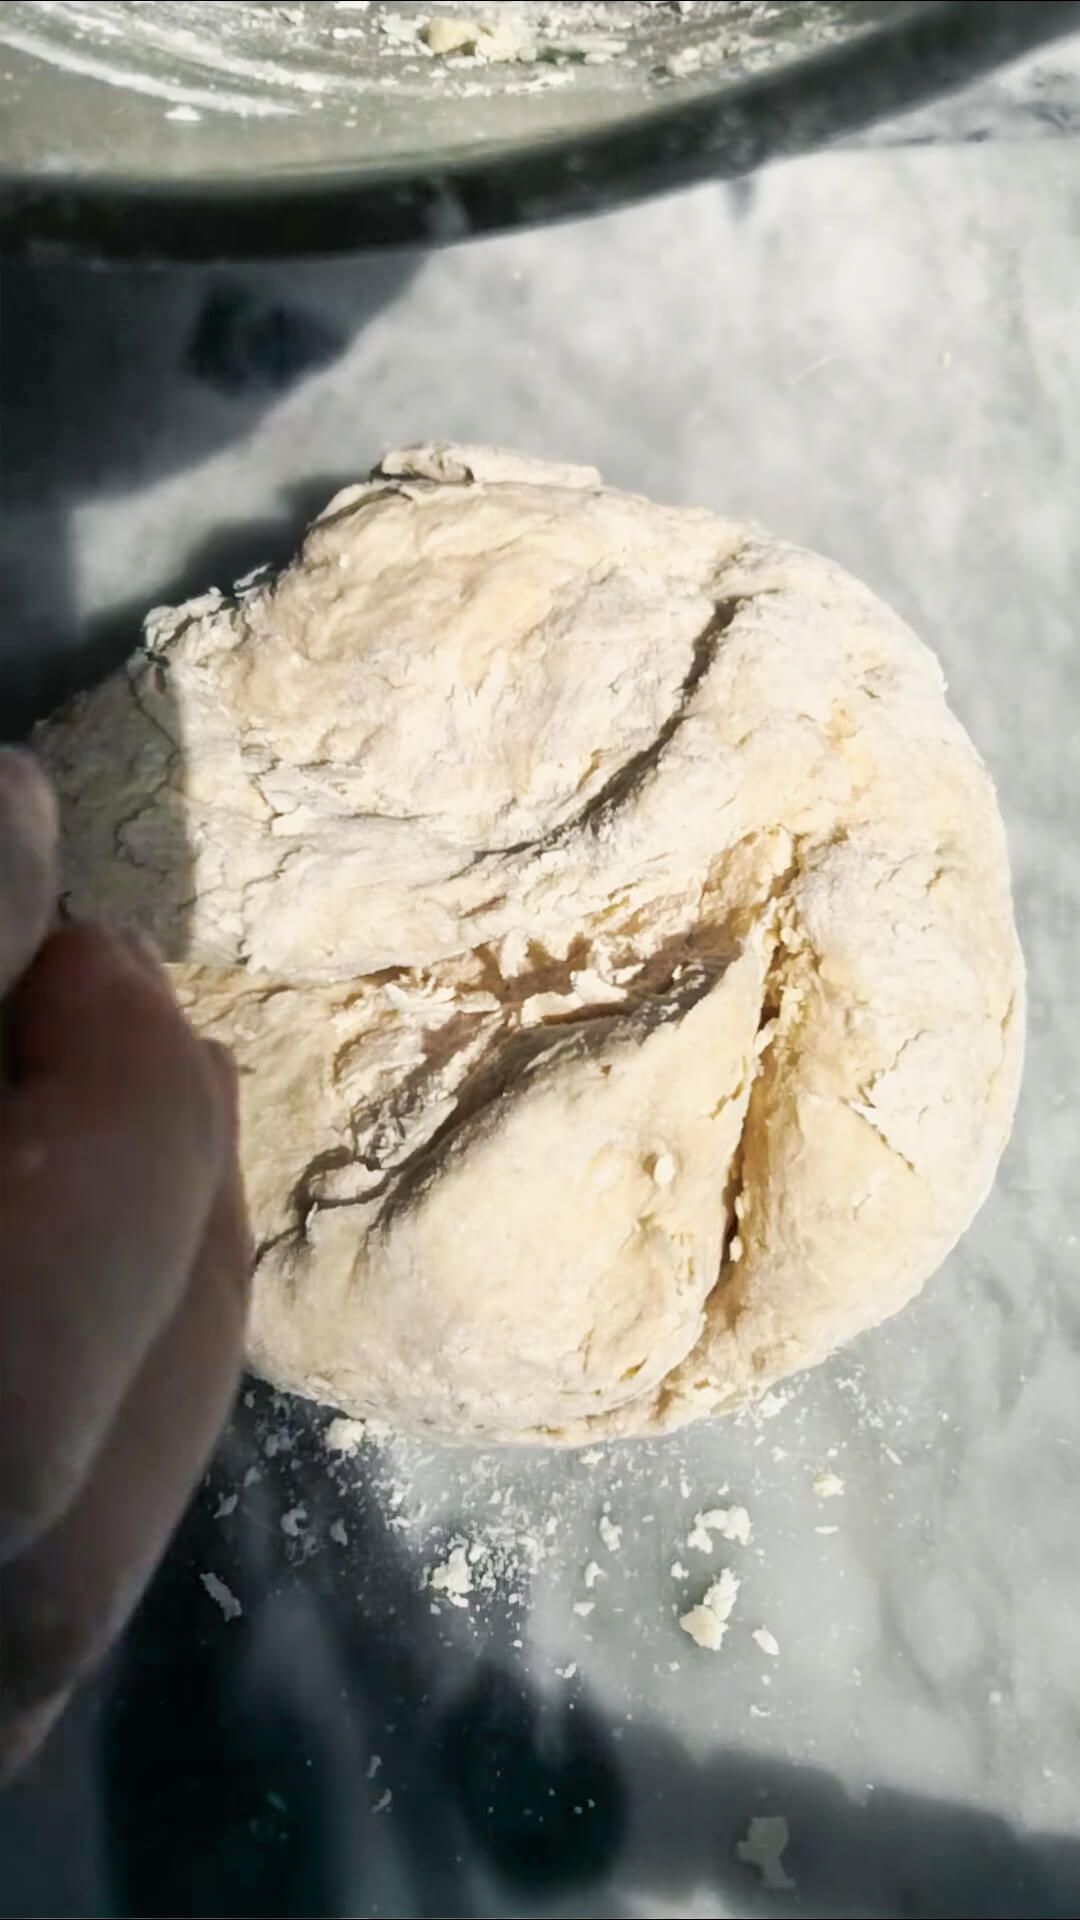 Floury, rough dough on a grey marble surface.